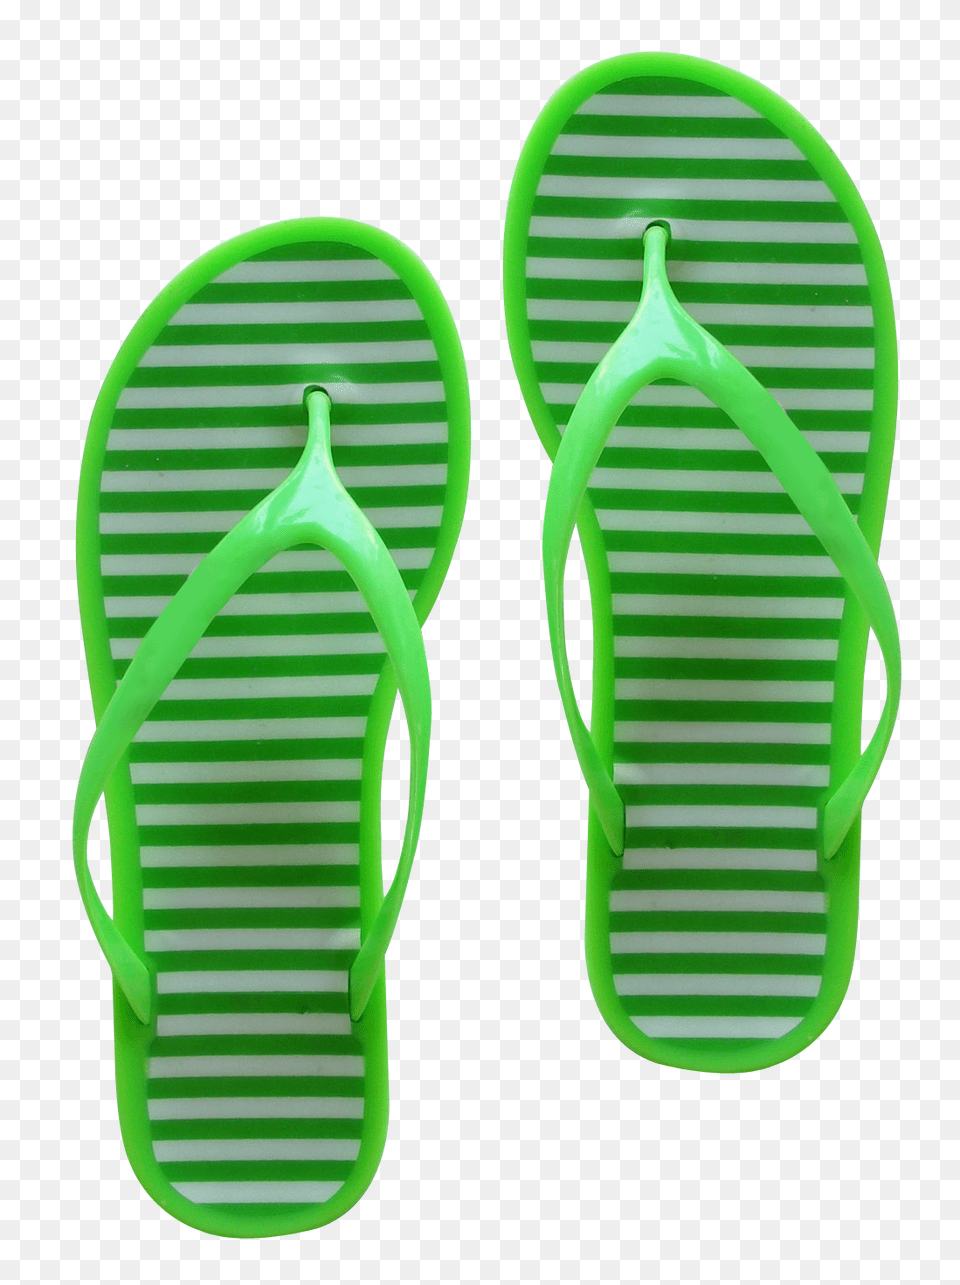 Pngpix Com Slippers Transparent Image, Clothing, Flip-flop, Footwear, Shoe Png